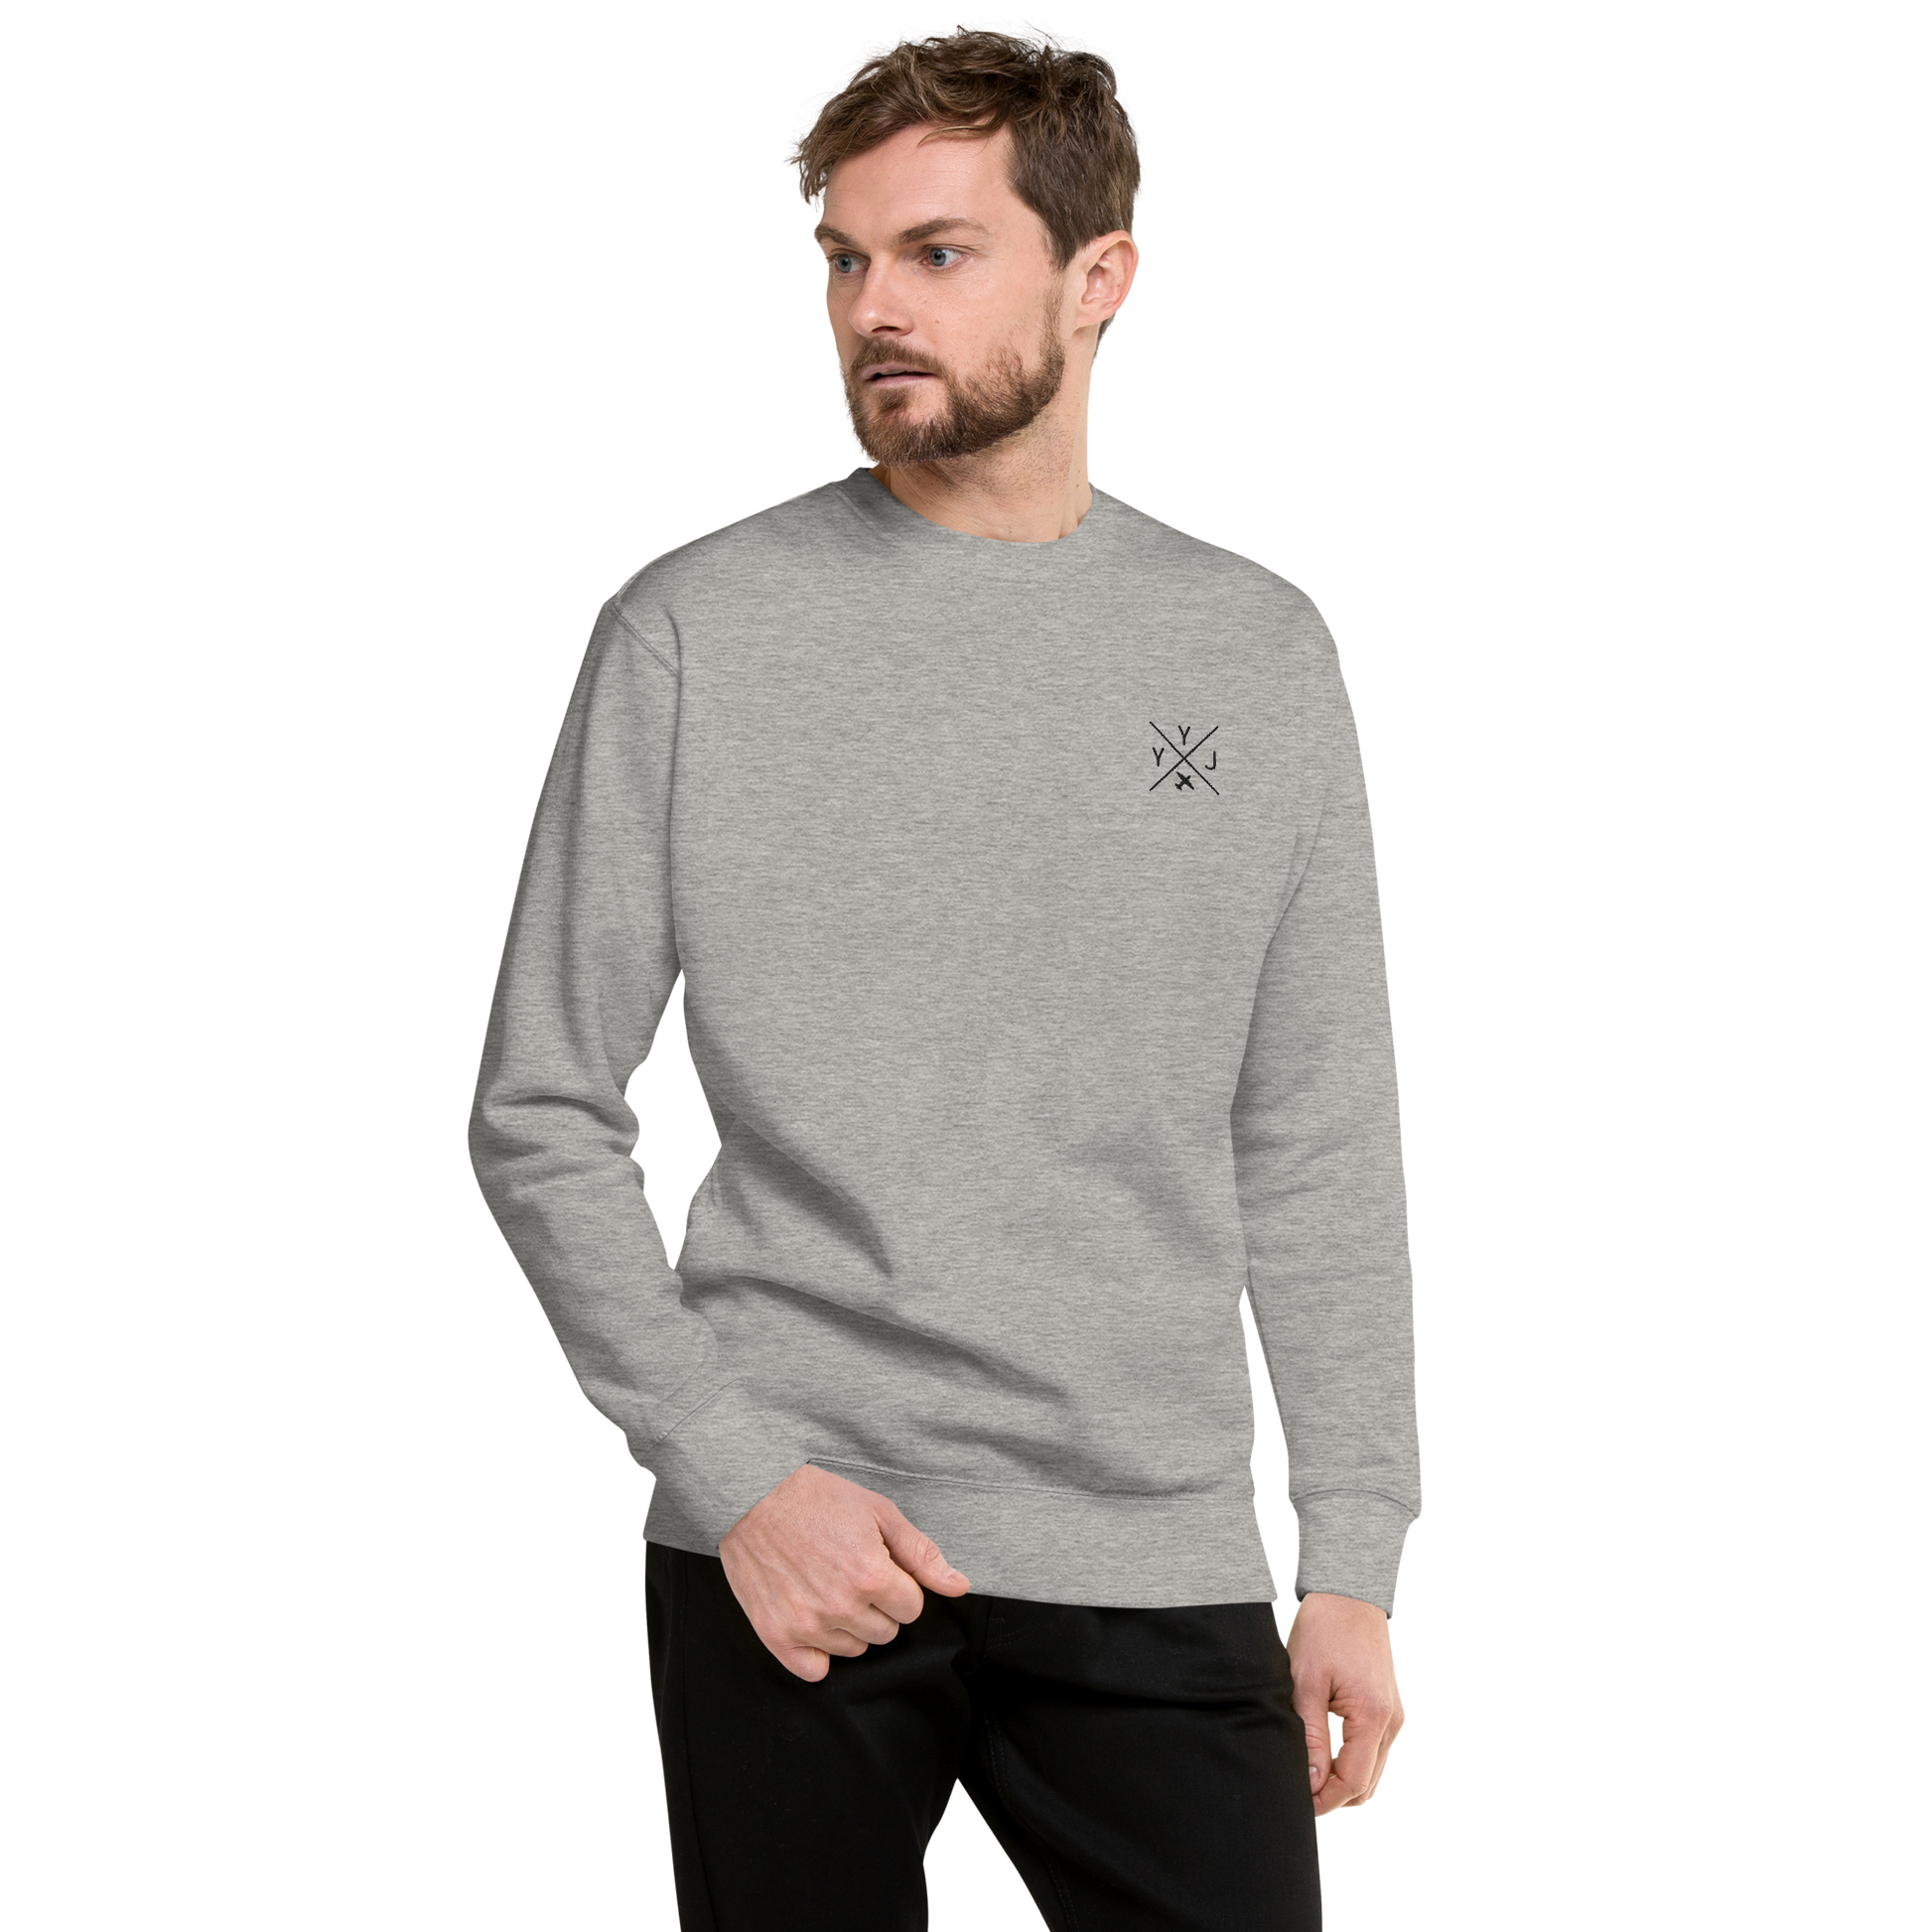 YHM Designs - YYJ Victoria Premium Sweatshirt - Crossed-X Design with Airport Code and Vintage Propliner - Black Embroidery - Image 01